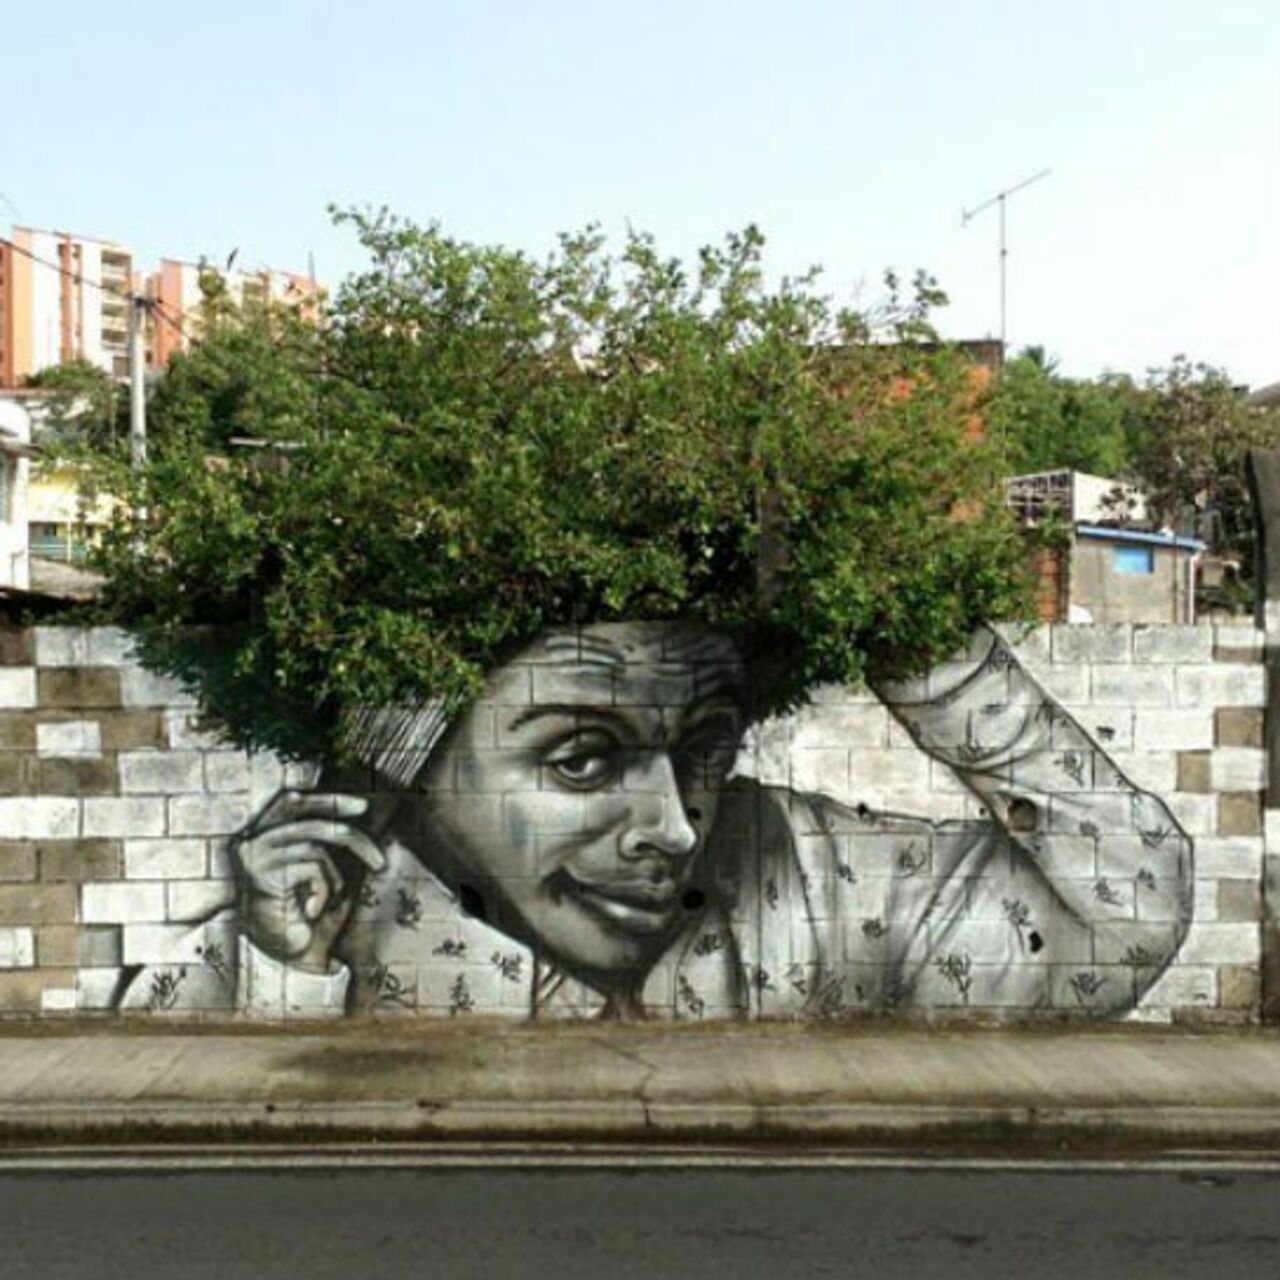 Schicke Frisur!#streetart #mural #graffiti #art https://t.co/PvQ4RjYxqV